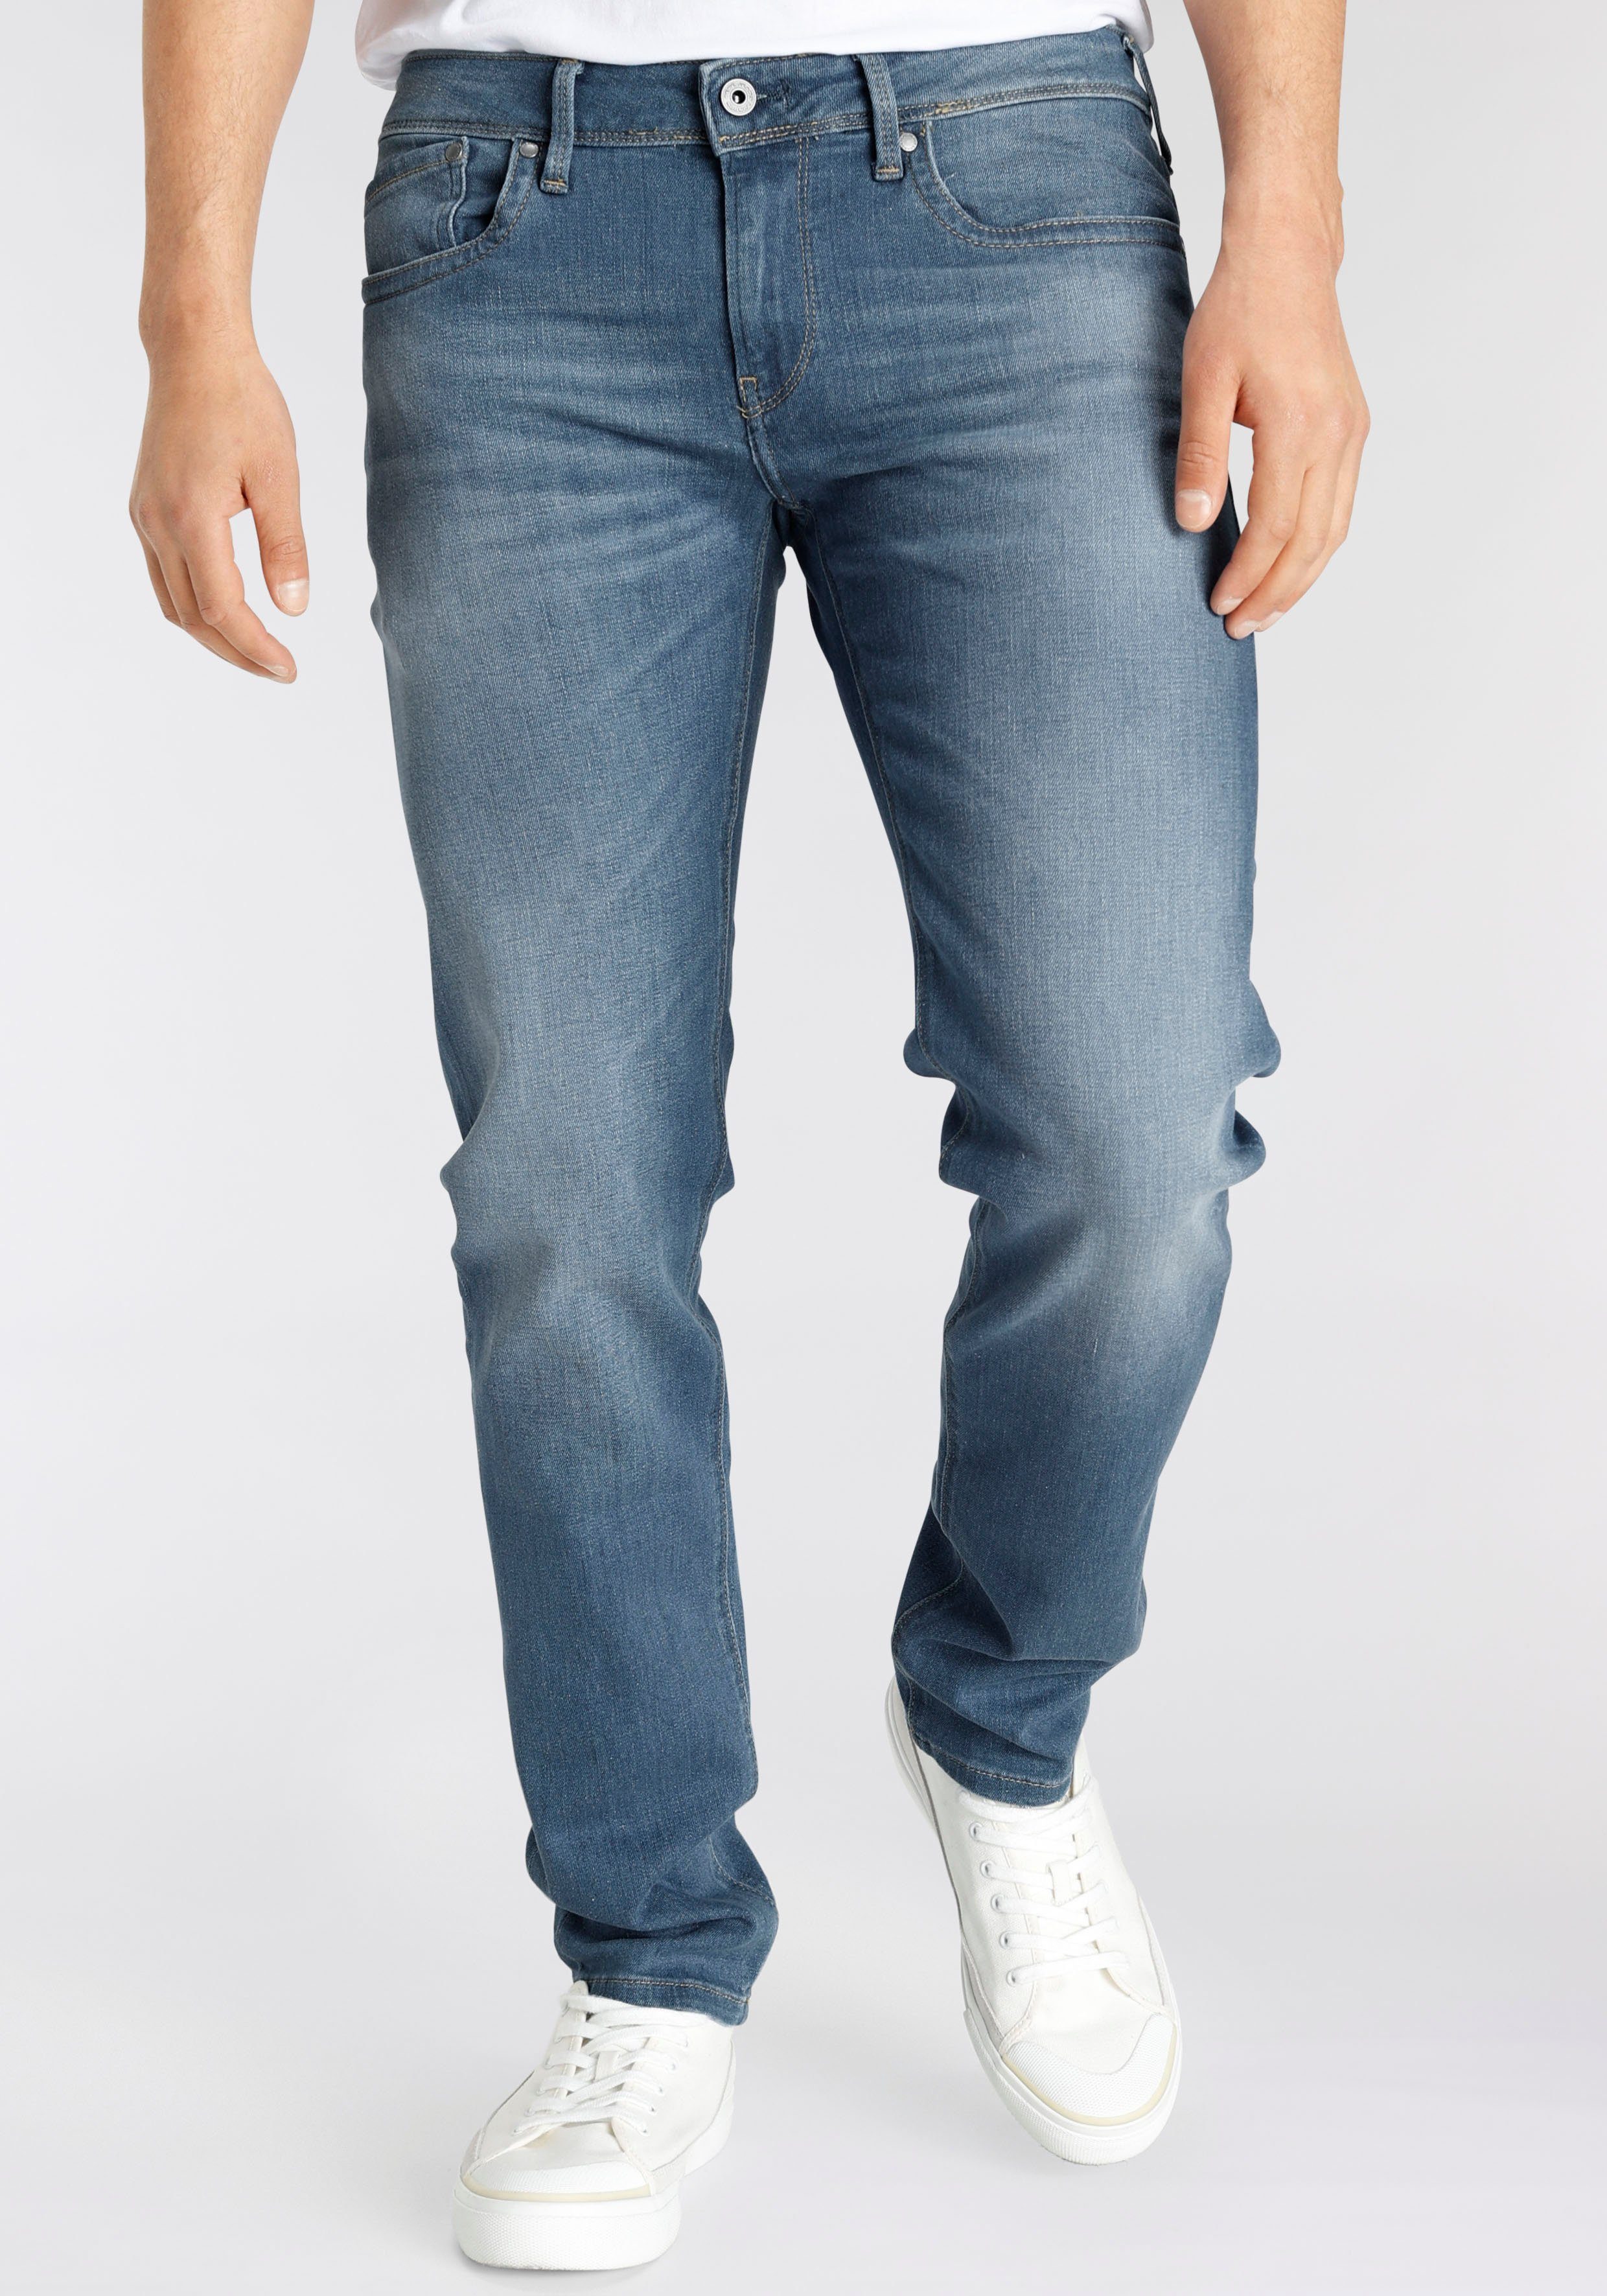 Jeans Pepe blue Hatch Slim-fit-Jeans medium